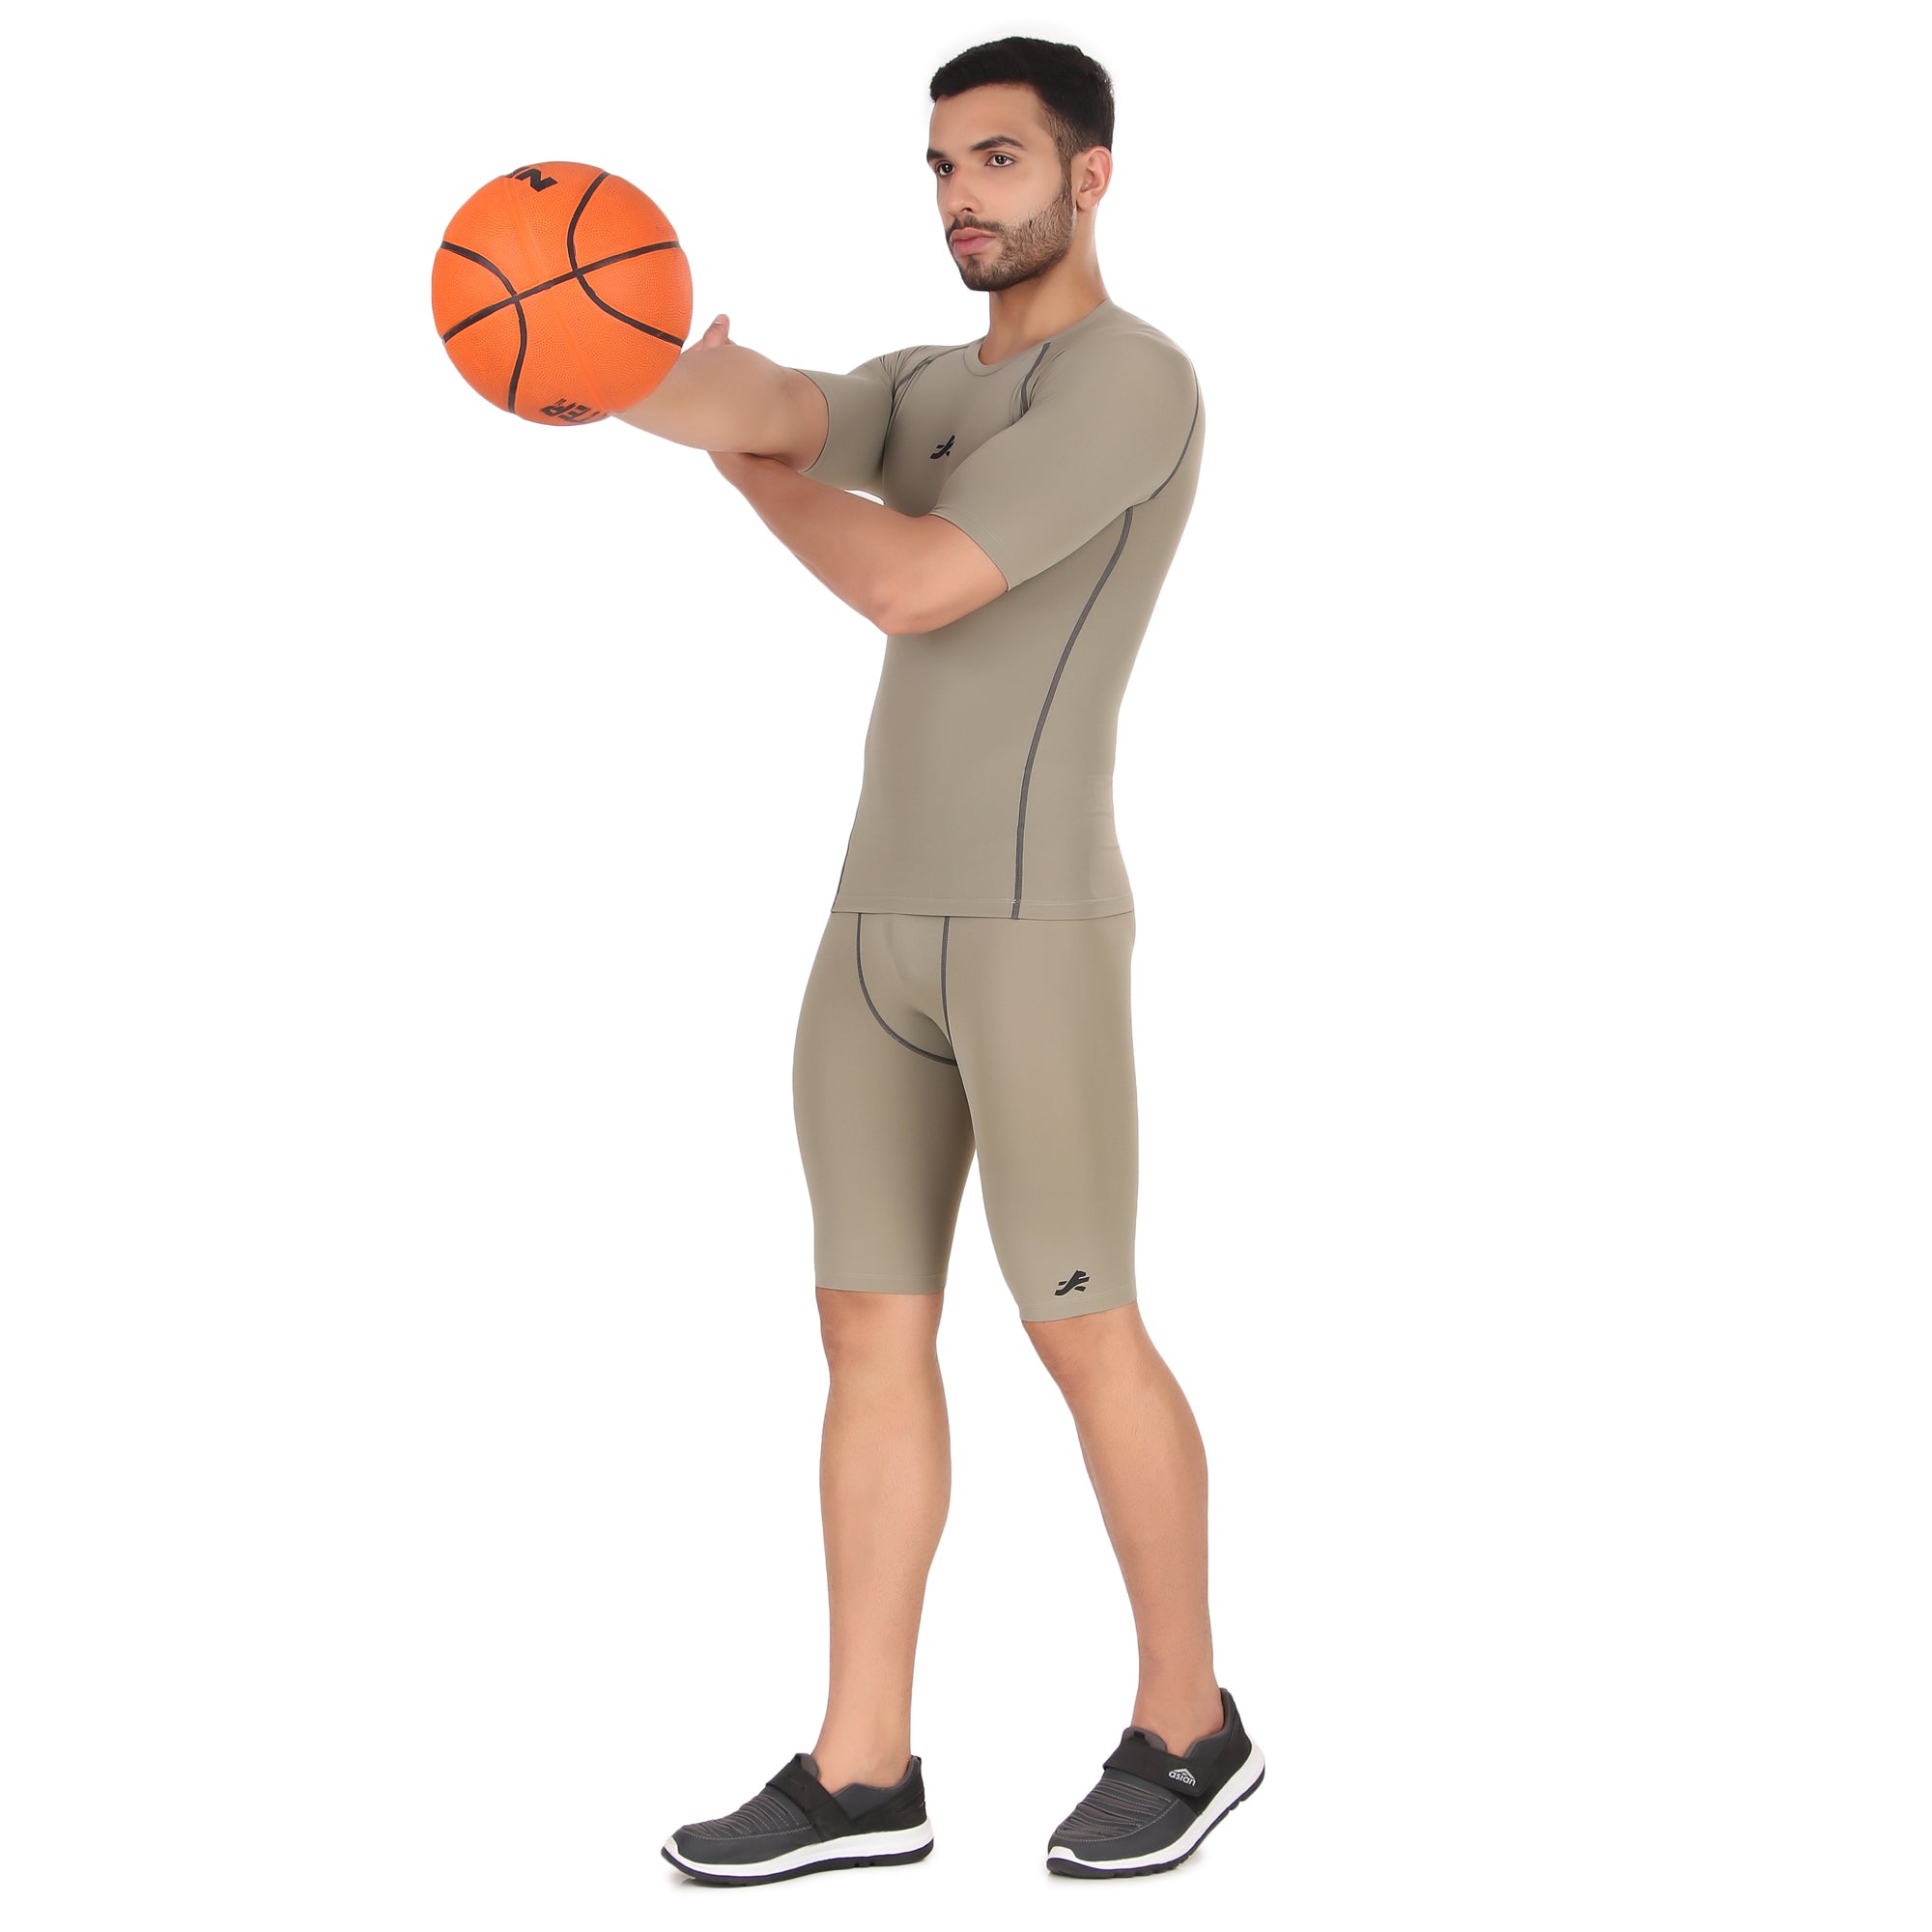 Nylon Compression Tshirt Half Sleeve Tights For Men (Pista)